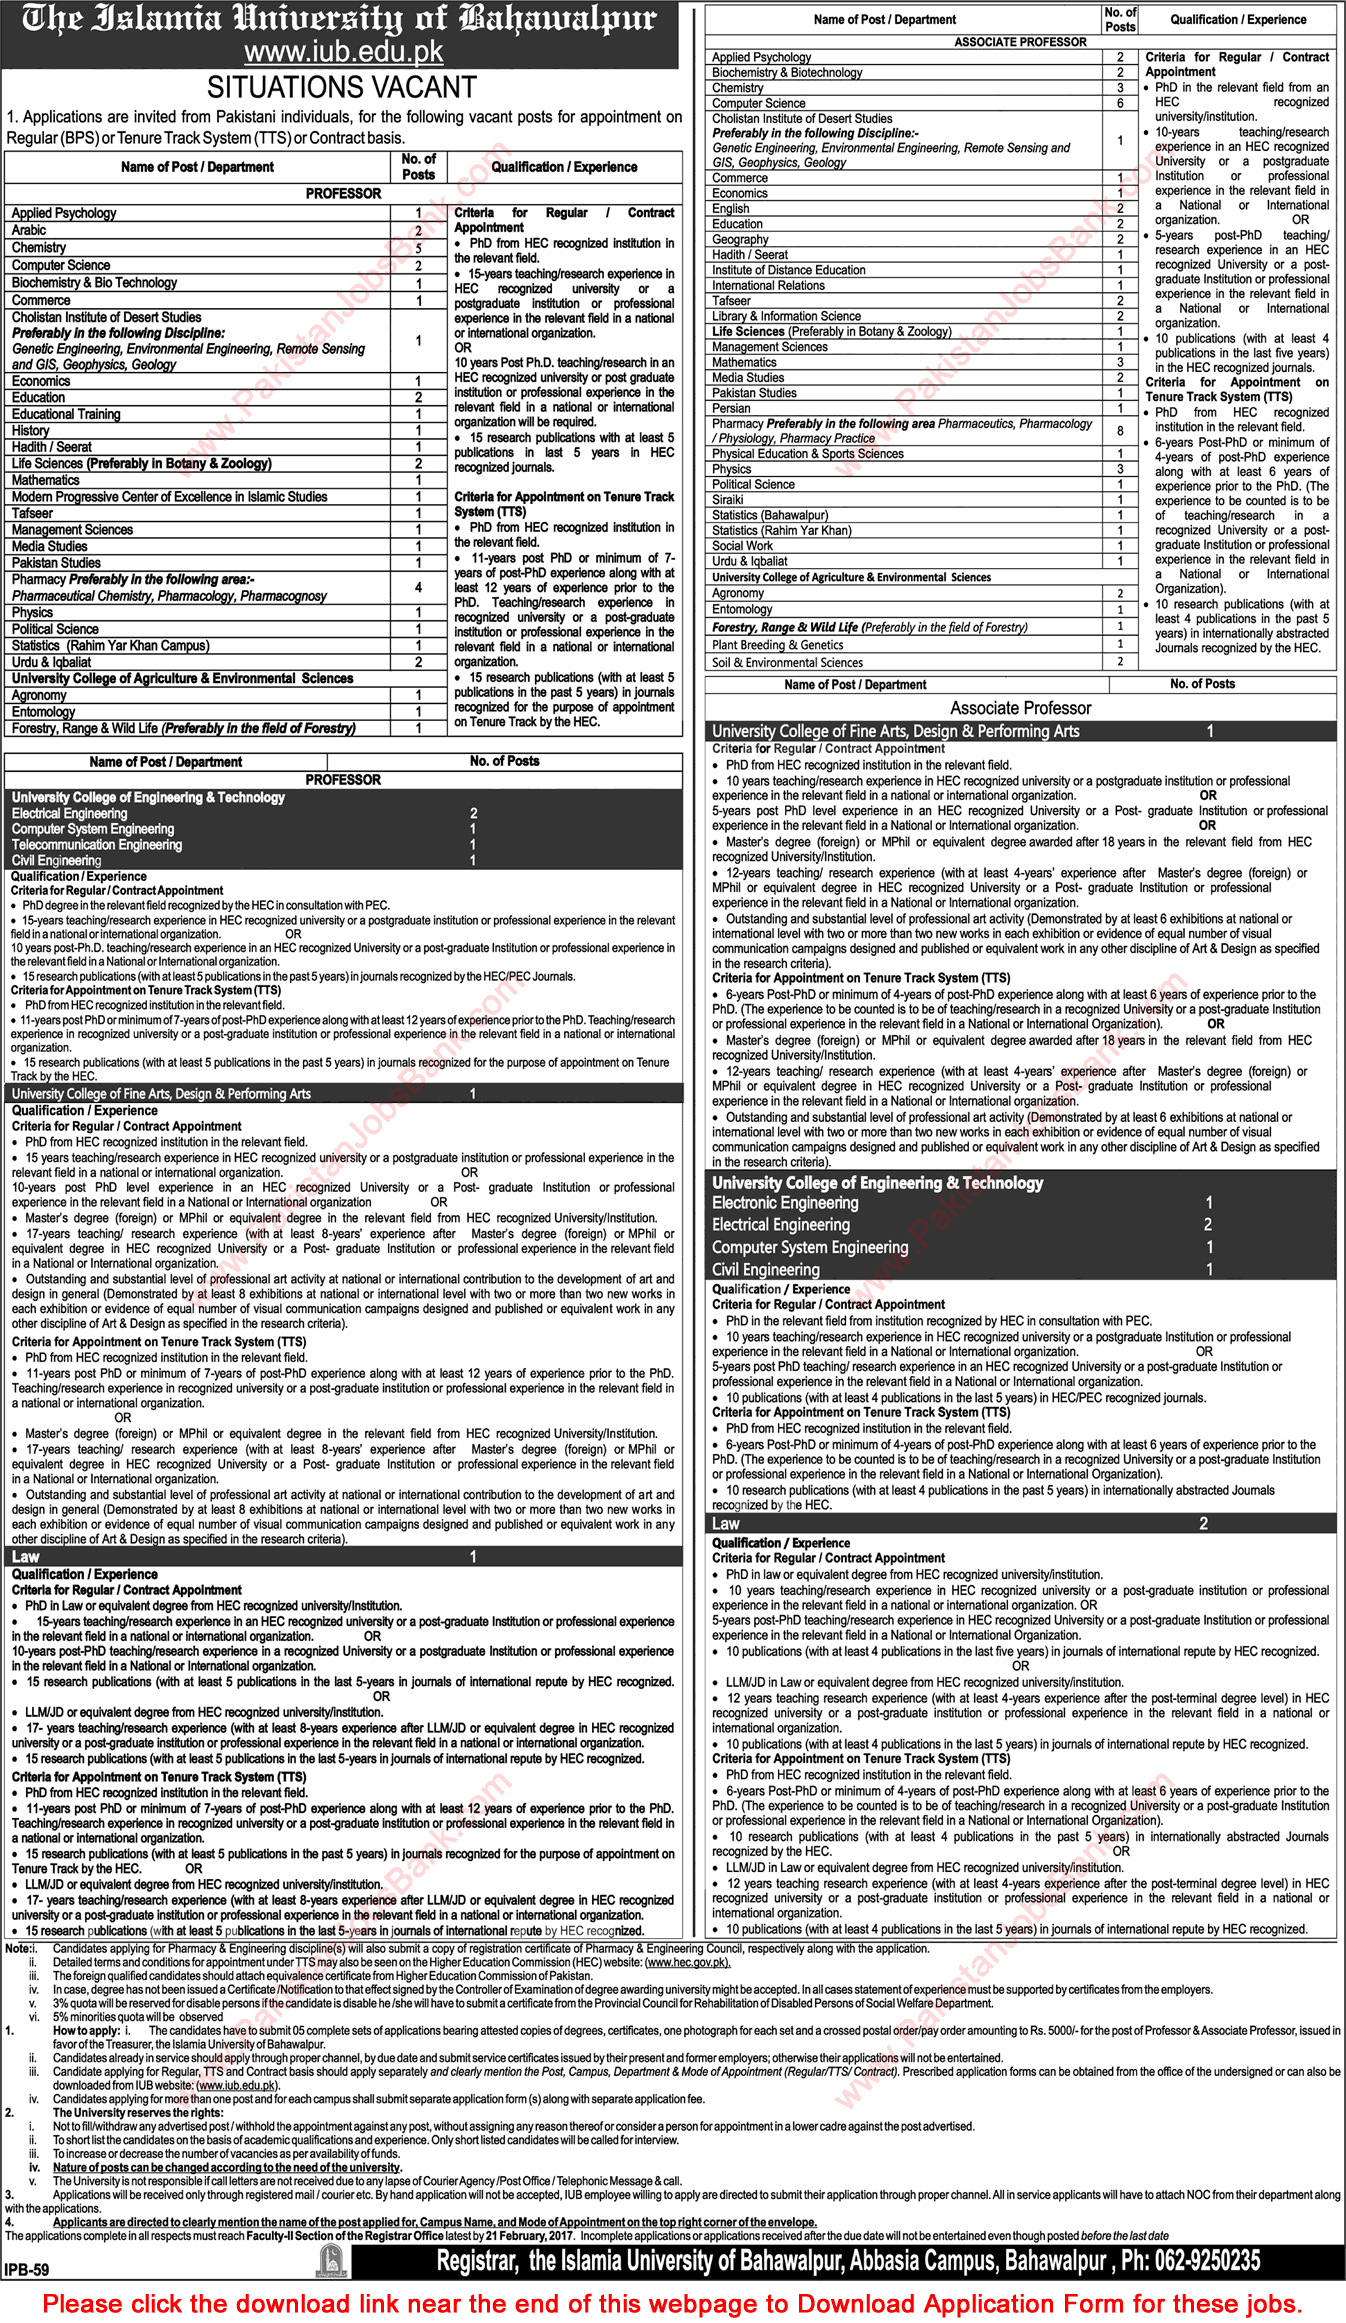 Islamia University Bahawalpur Jobs 2017 Application Form Teaching Faculty Latest